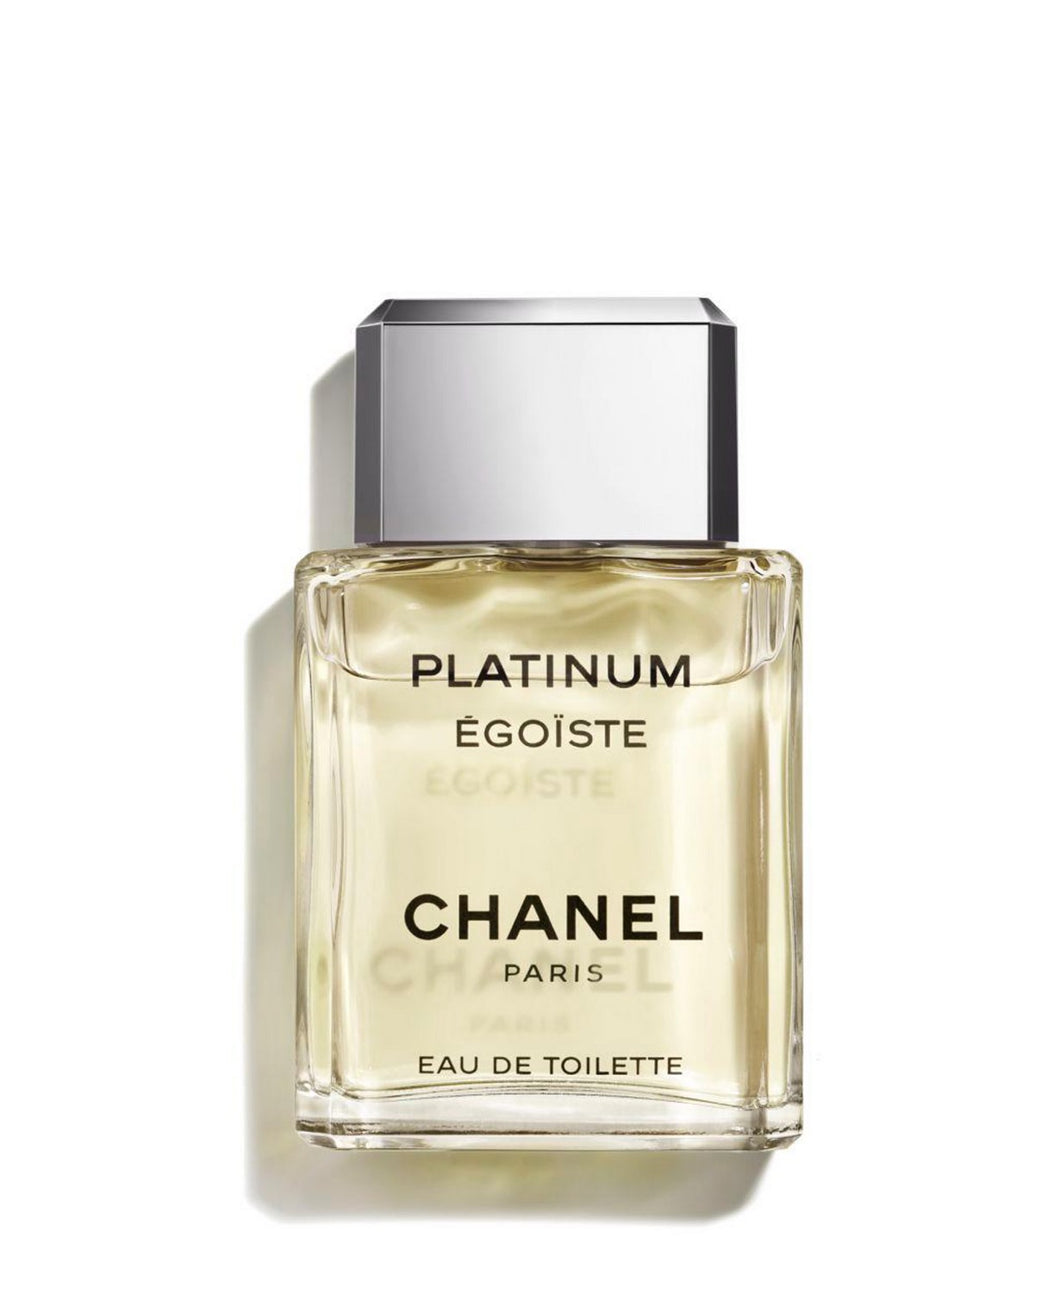 platinum egoist chanel eau de parfum 3.4oz for mens - alwaysspecialgifts.com